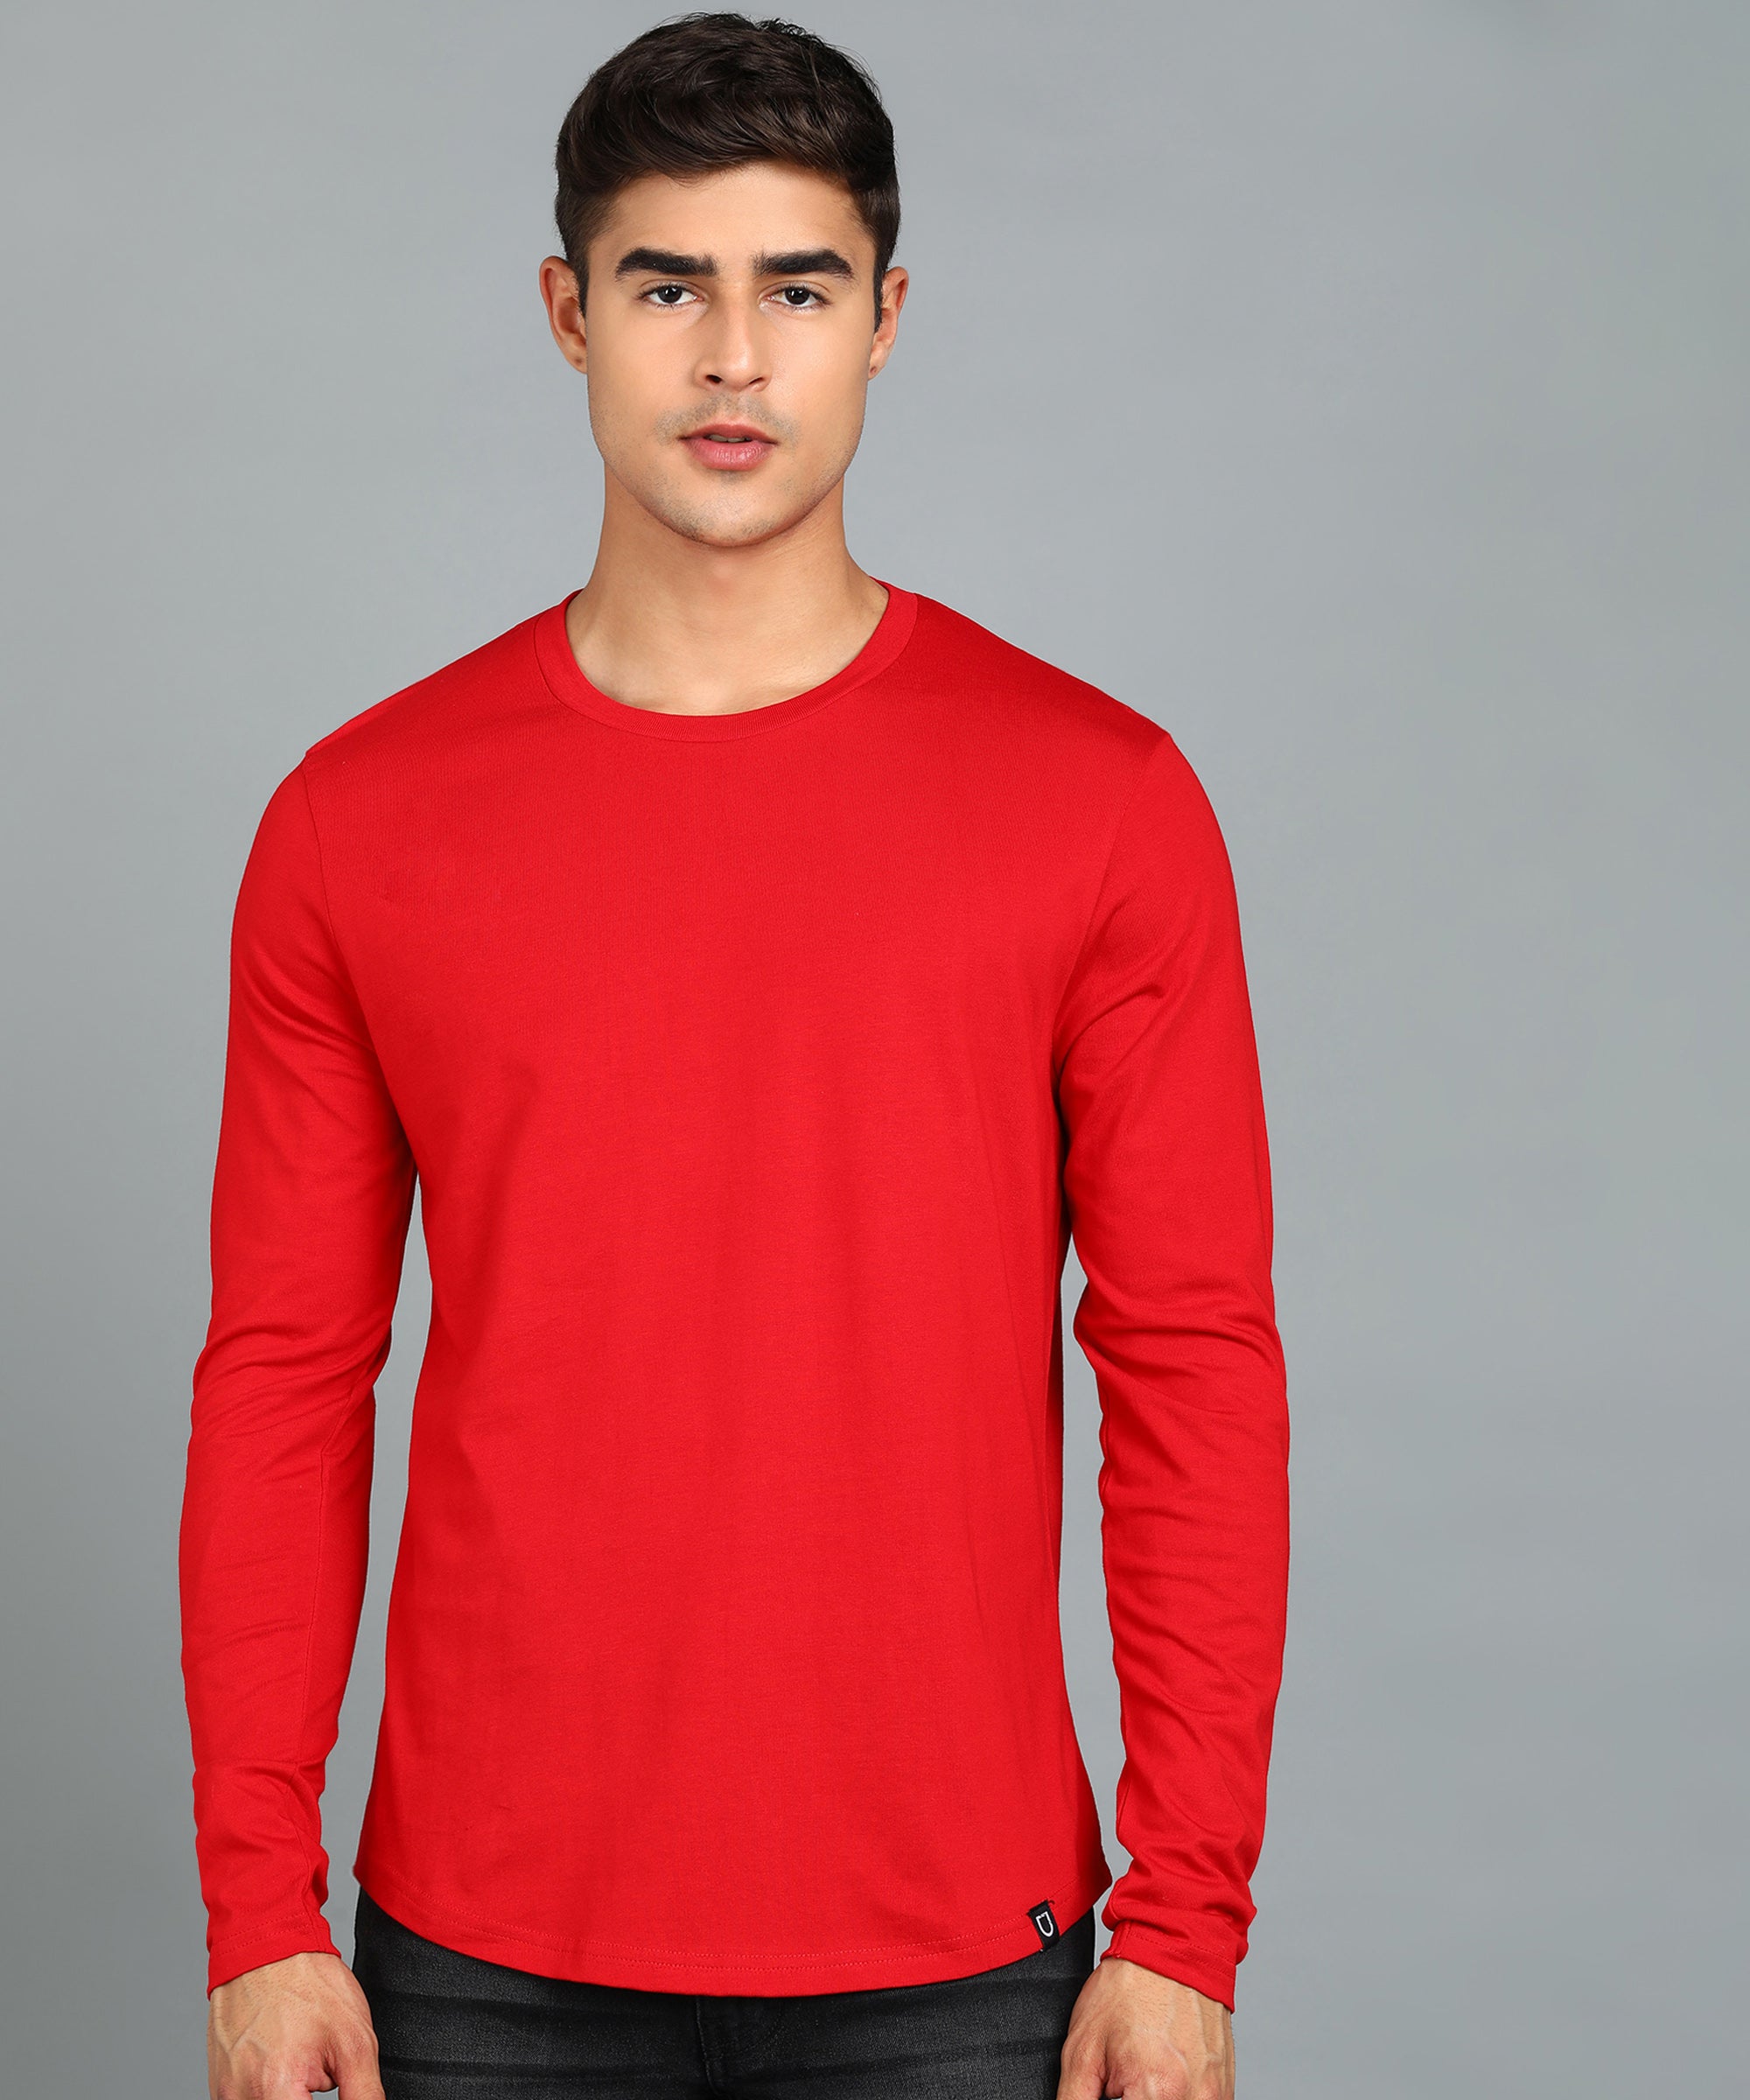 Urbano Fashion Men's Printed Red Round Neck Full Sleeve Slim Fit Cotton T-Shirt